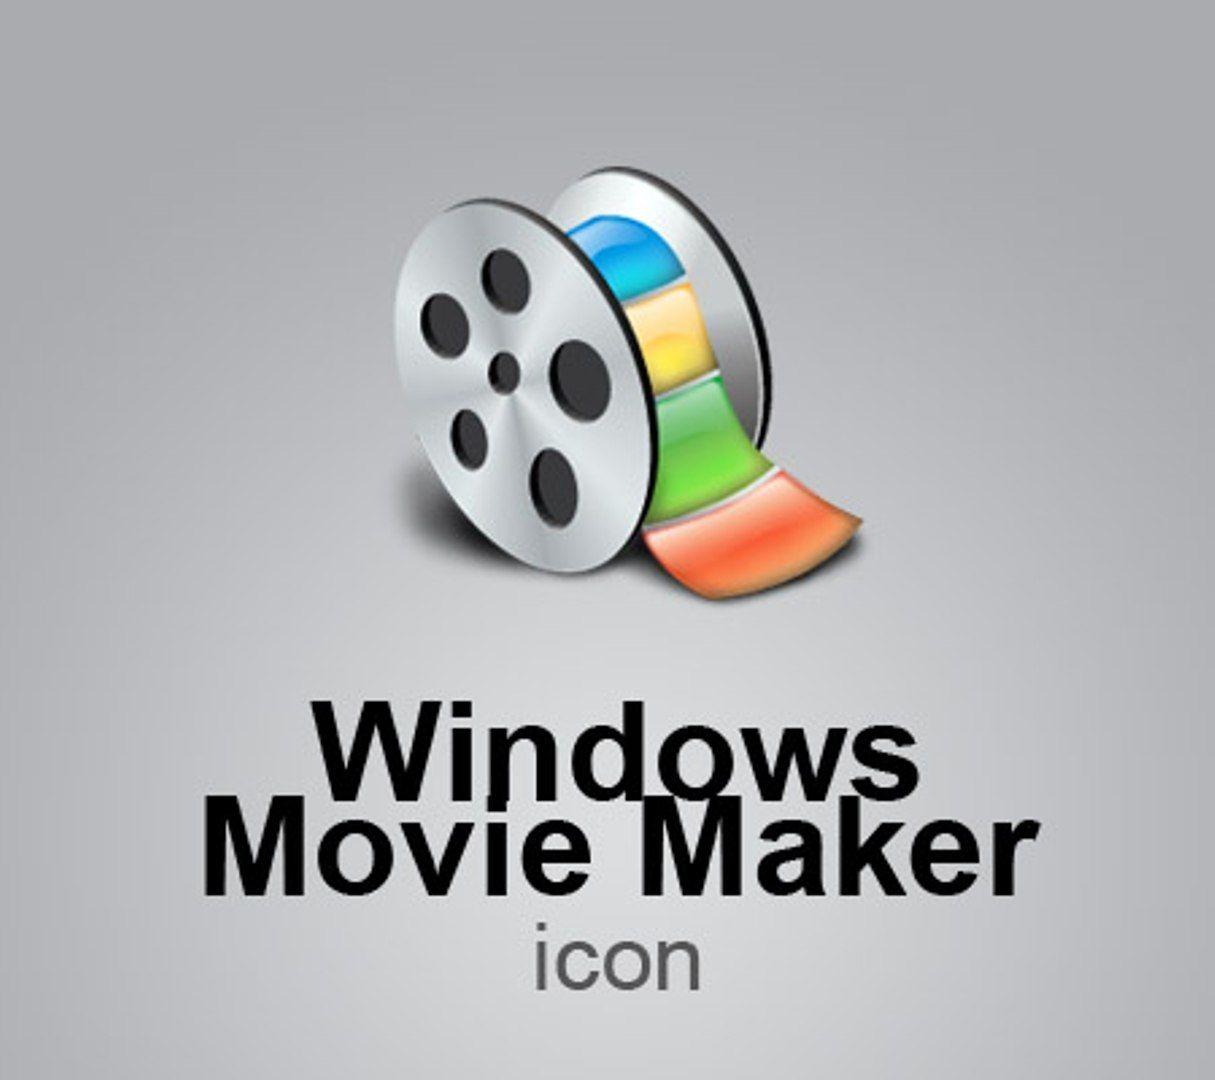 Windows Movie Maker Logo - How To Use Learn Windows Movie Maker In [Urdu Hindi]